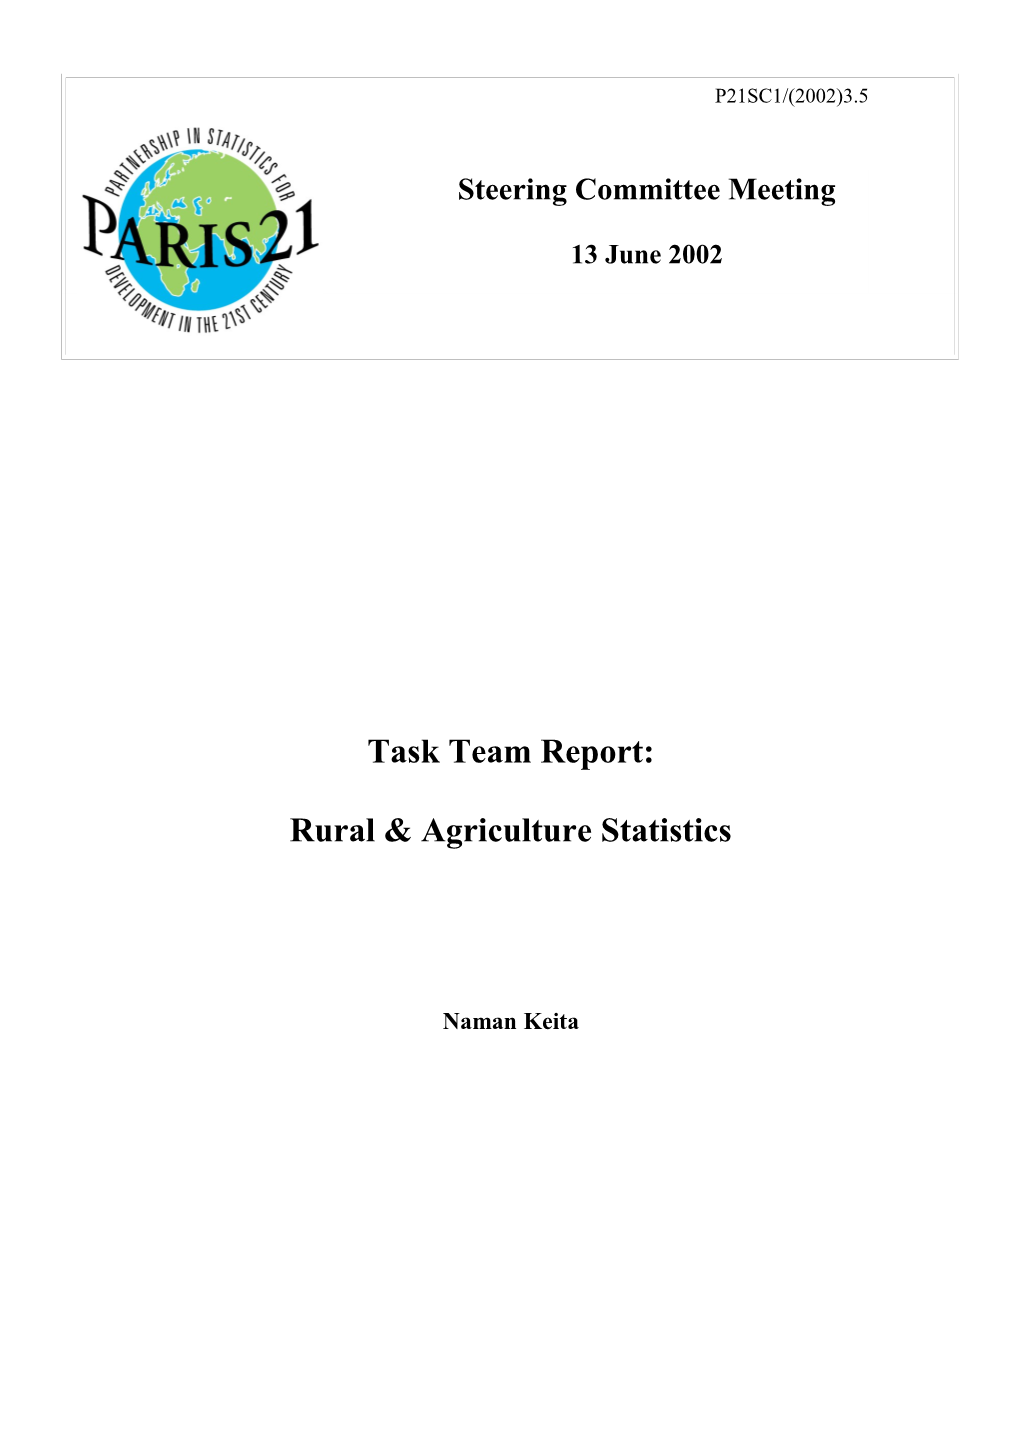 PARIS21 Task Team for Argicultural and Rural Statistics